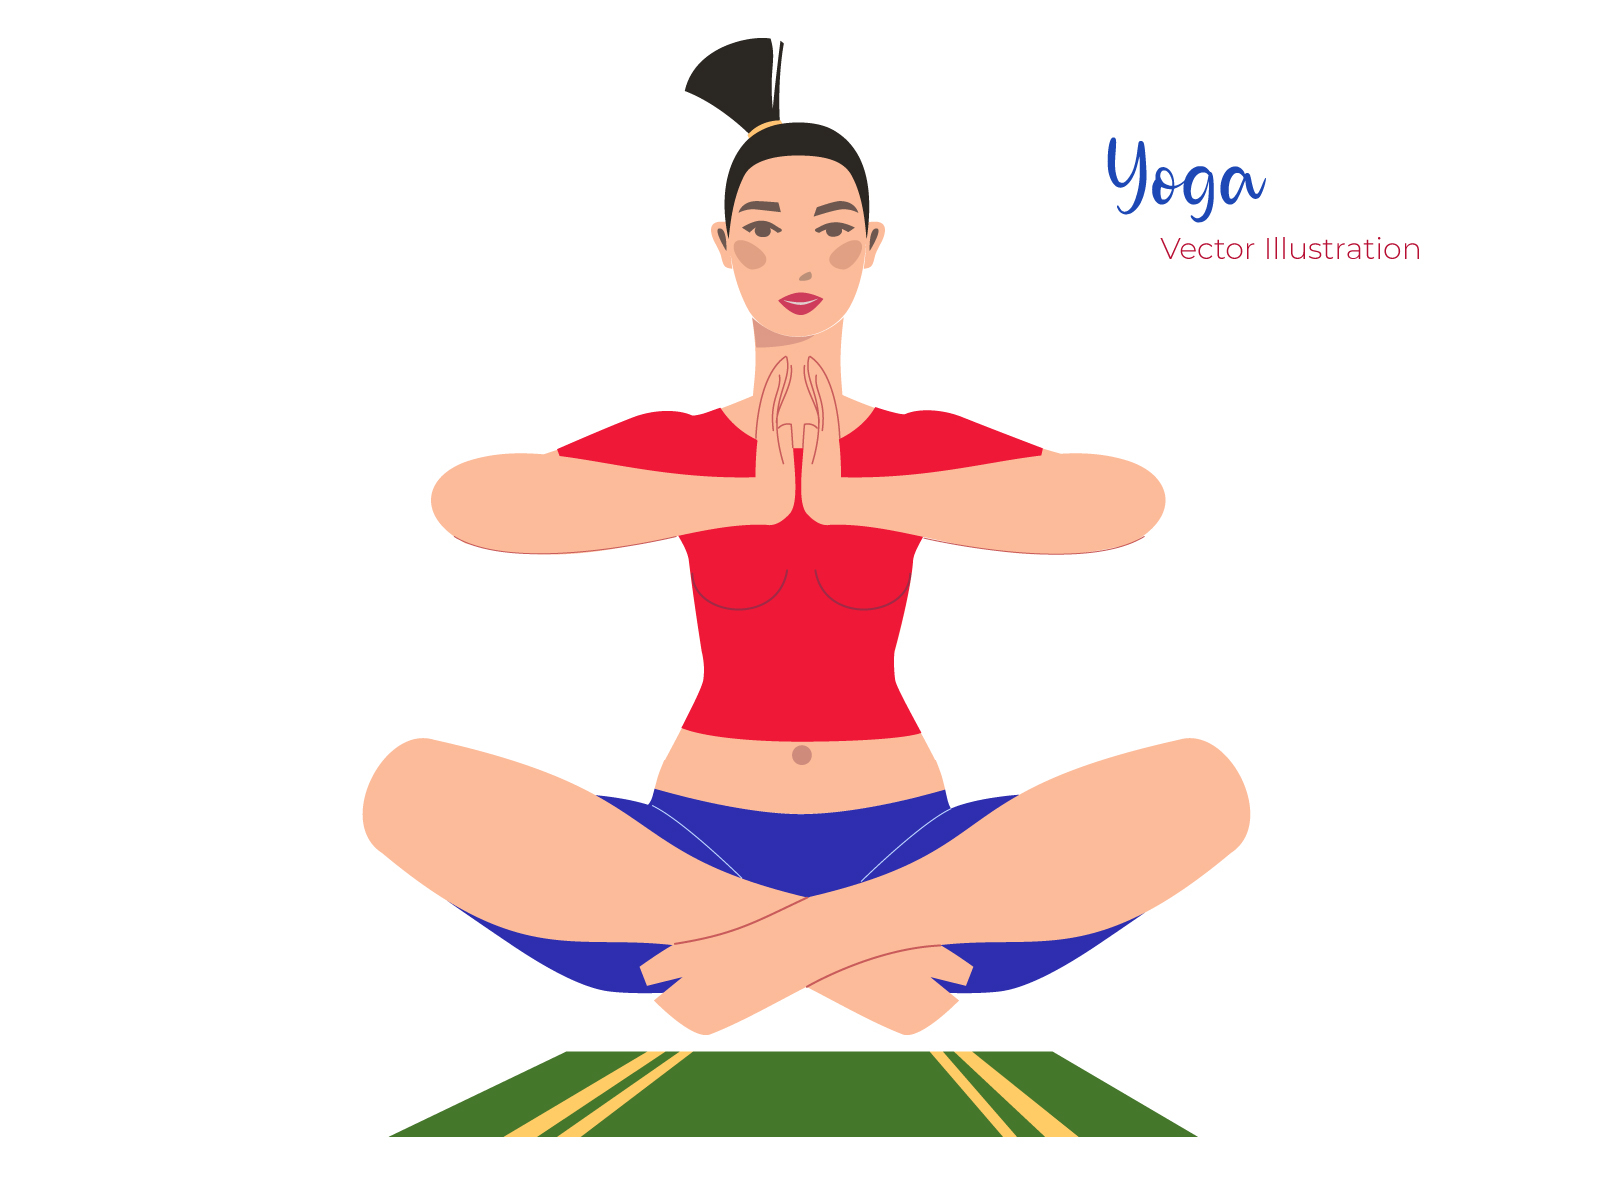 Yoga - Vector Illustration by Stanislav Batalov on Dribbble